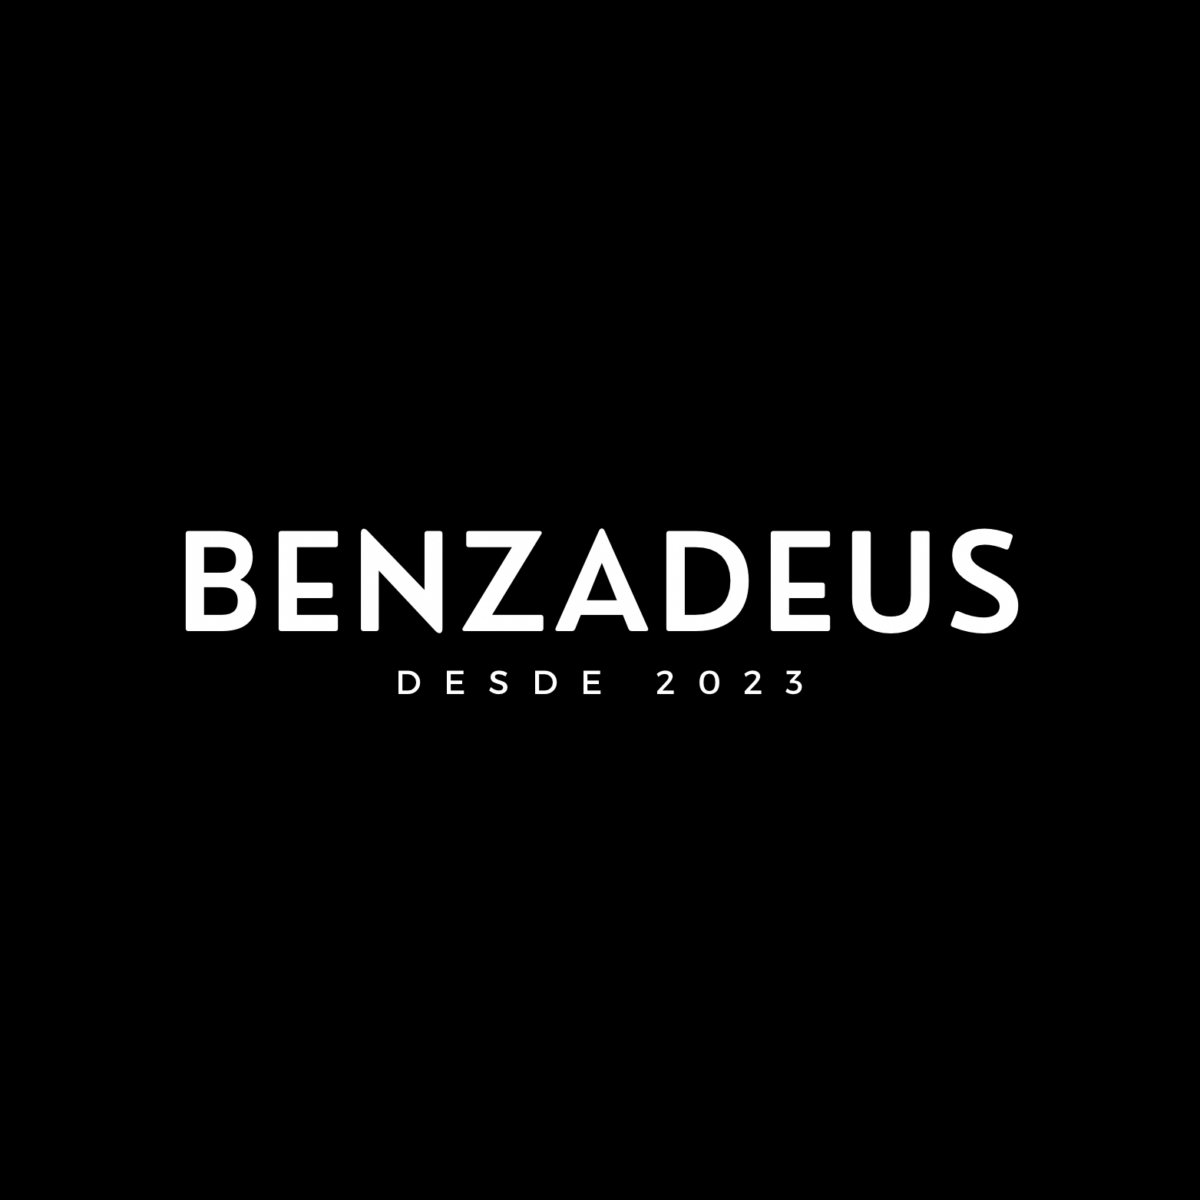 Benzadeus